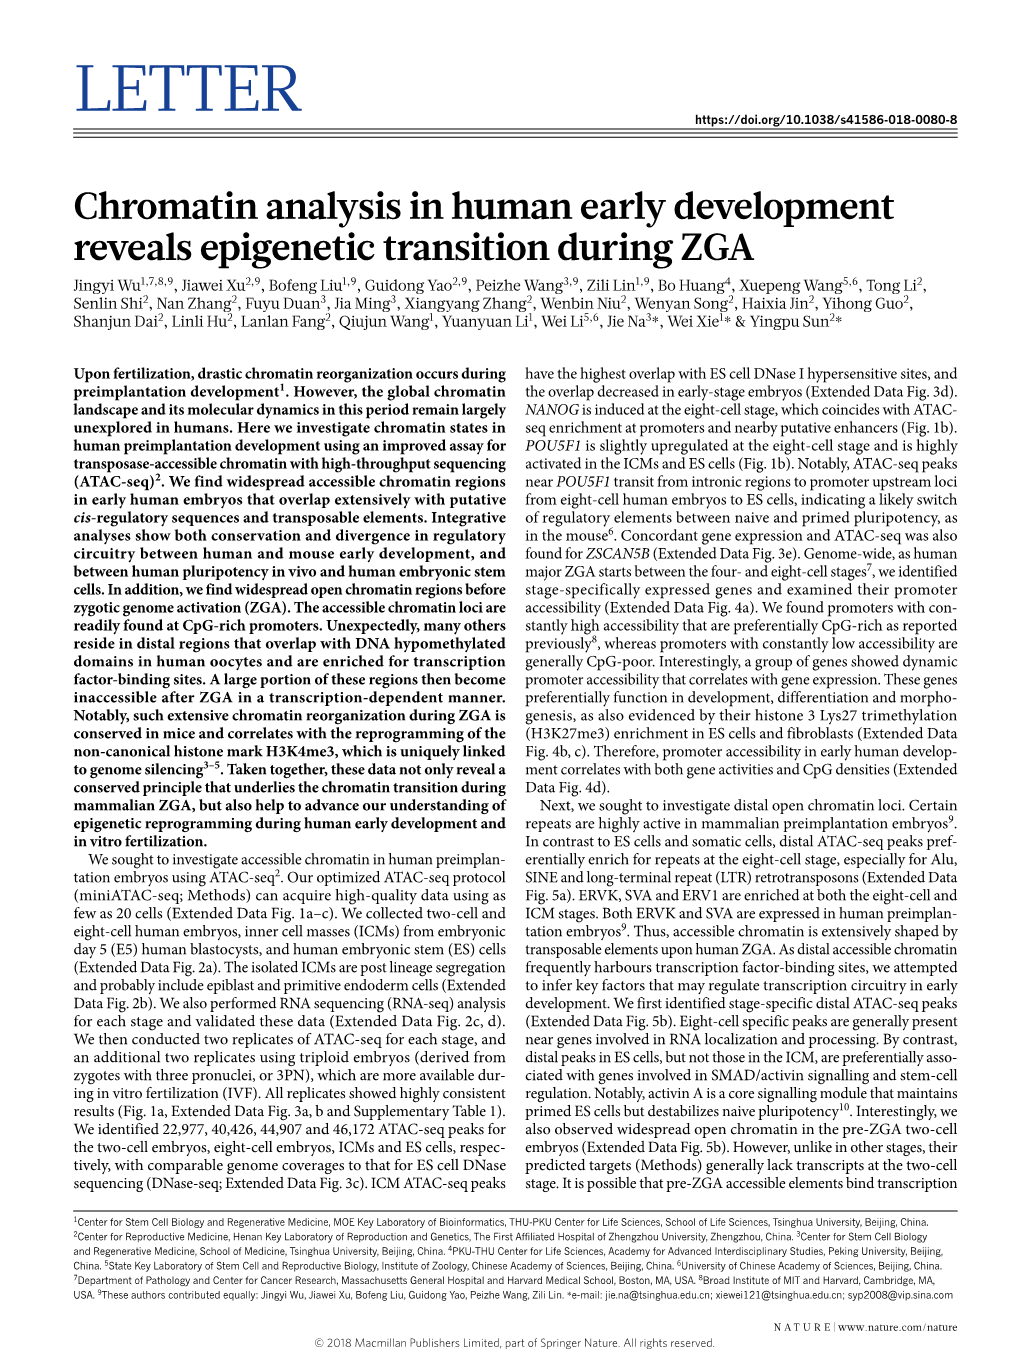 Chromatin Analysis in Human Early Development Reveals Epigenetic